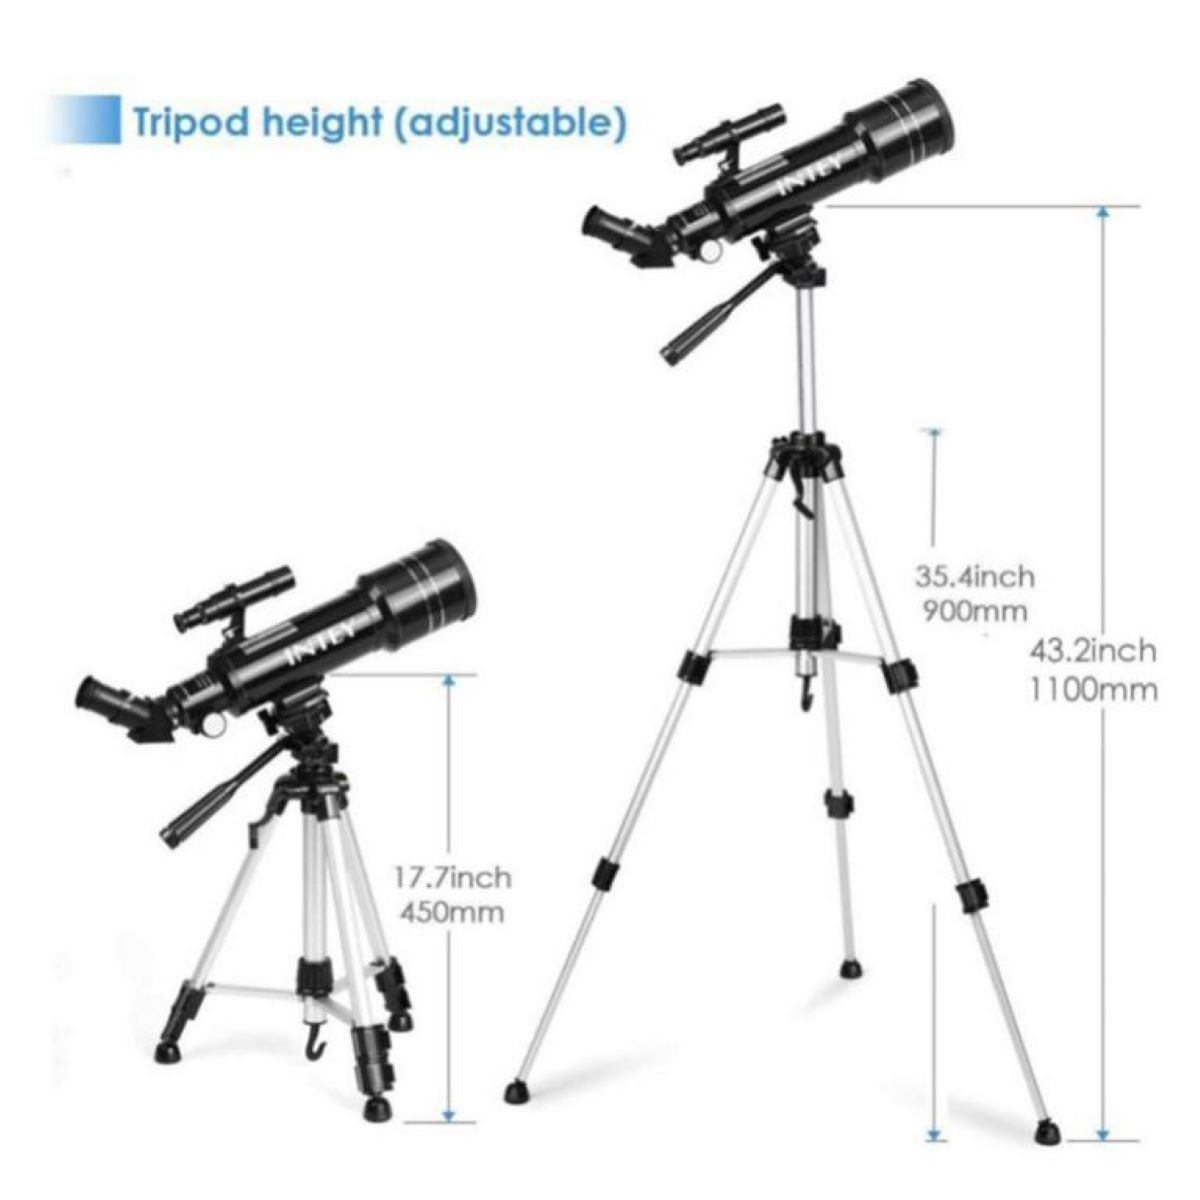 INTEY Binocular 16x, 67x, 70 mm, Teleskop